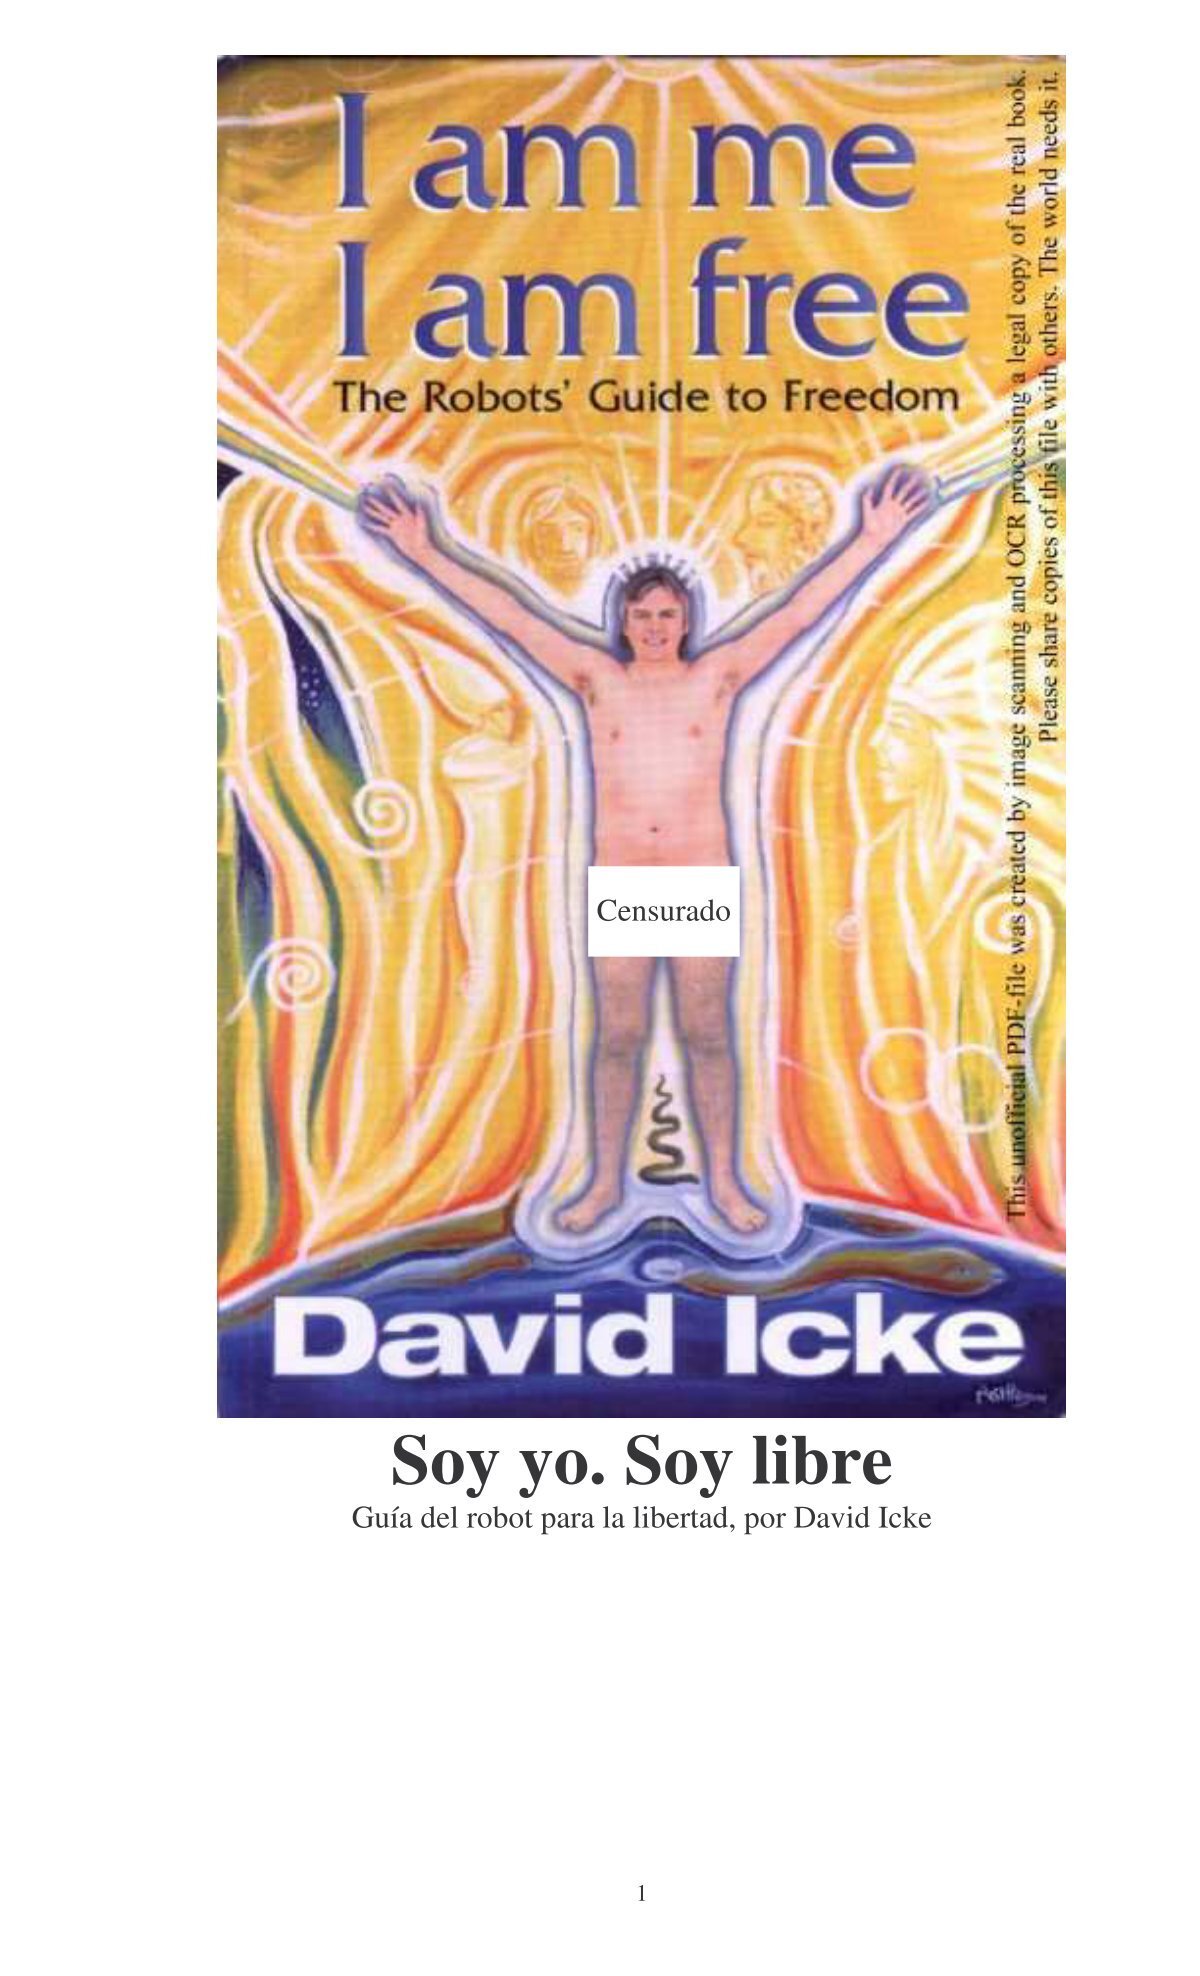 Hp Color Laserjet 8500 Ps Job 3 Download David Icke Books For